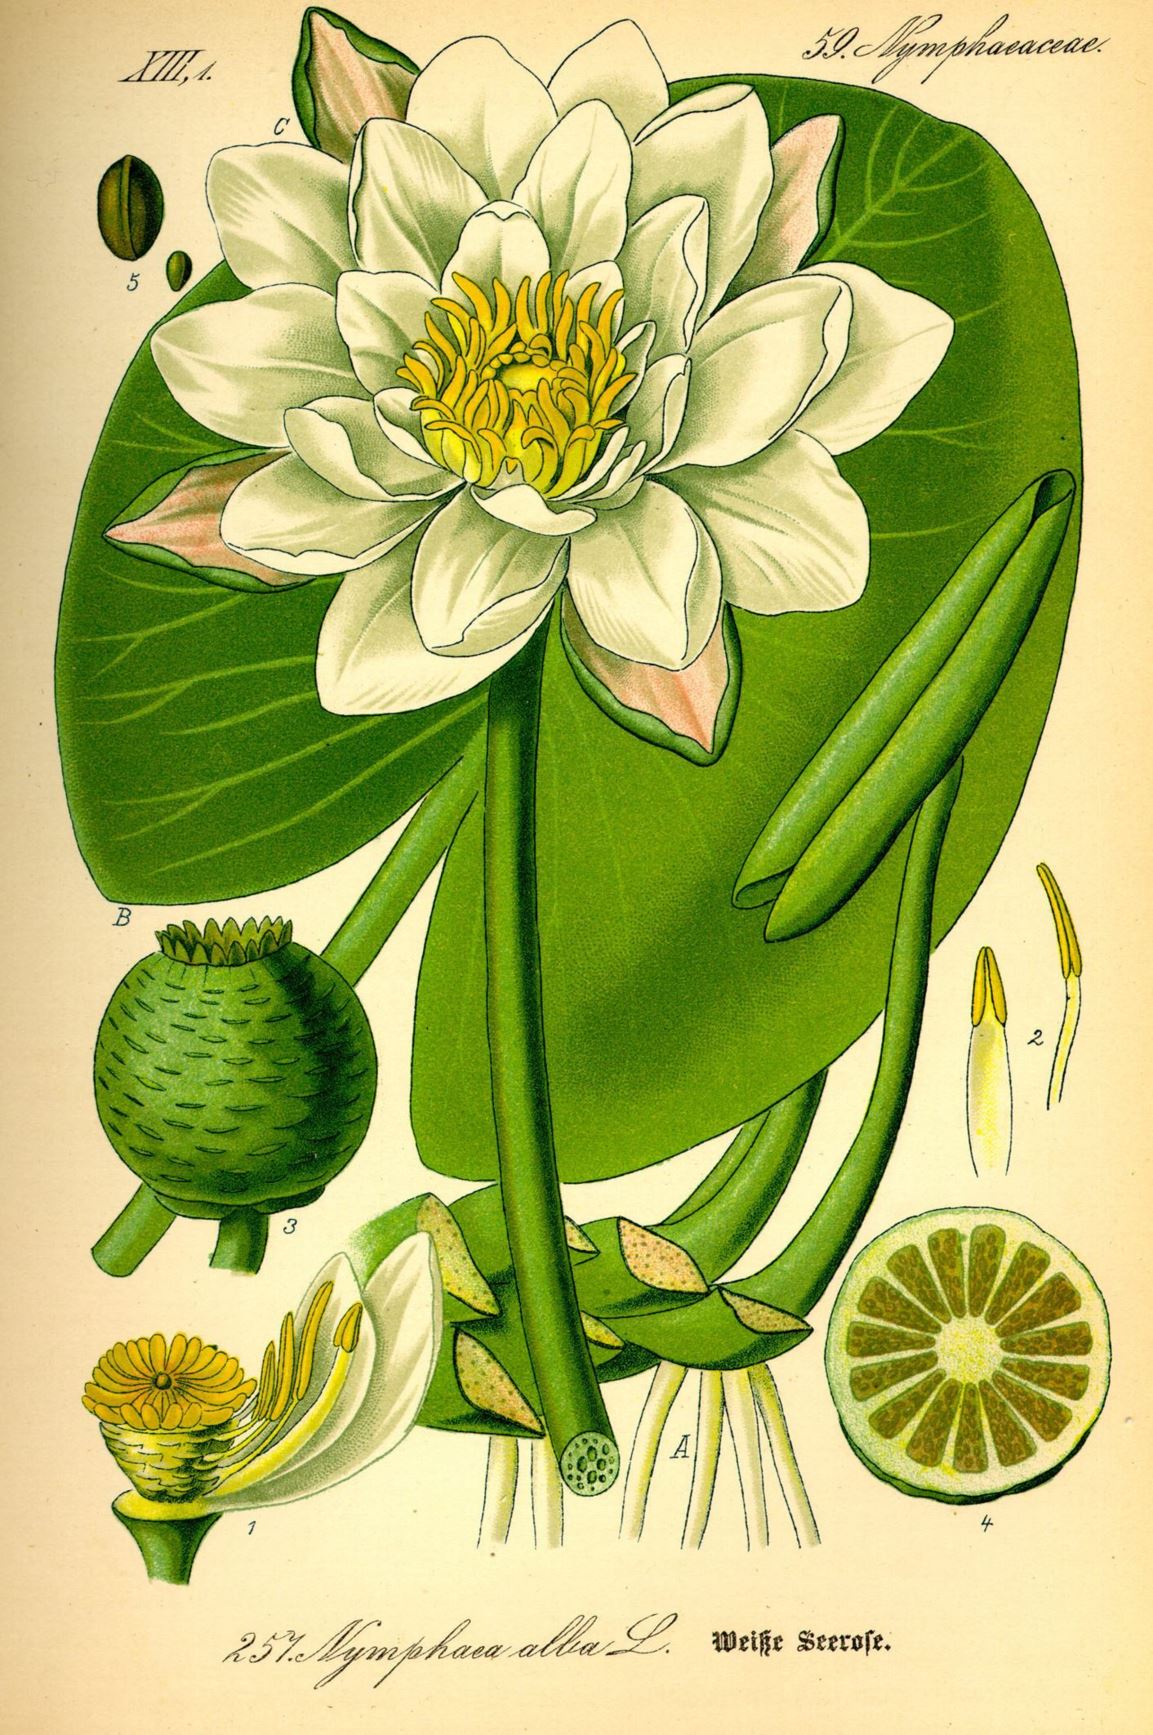 Nymphaea alba - Witte waterlelie, European white lily